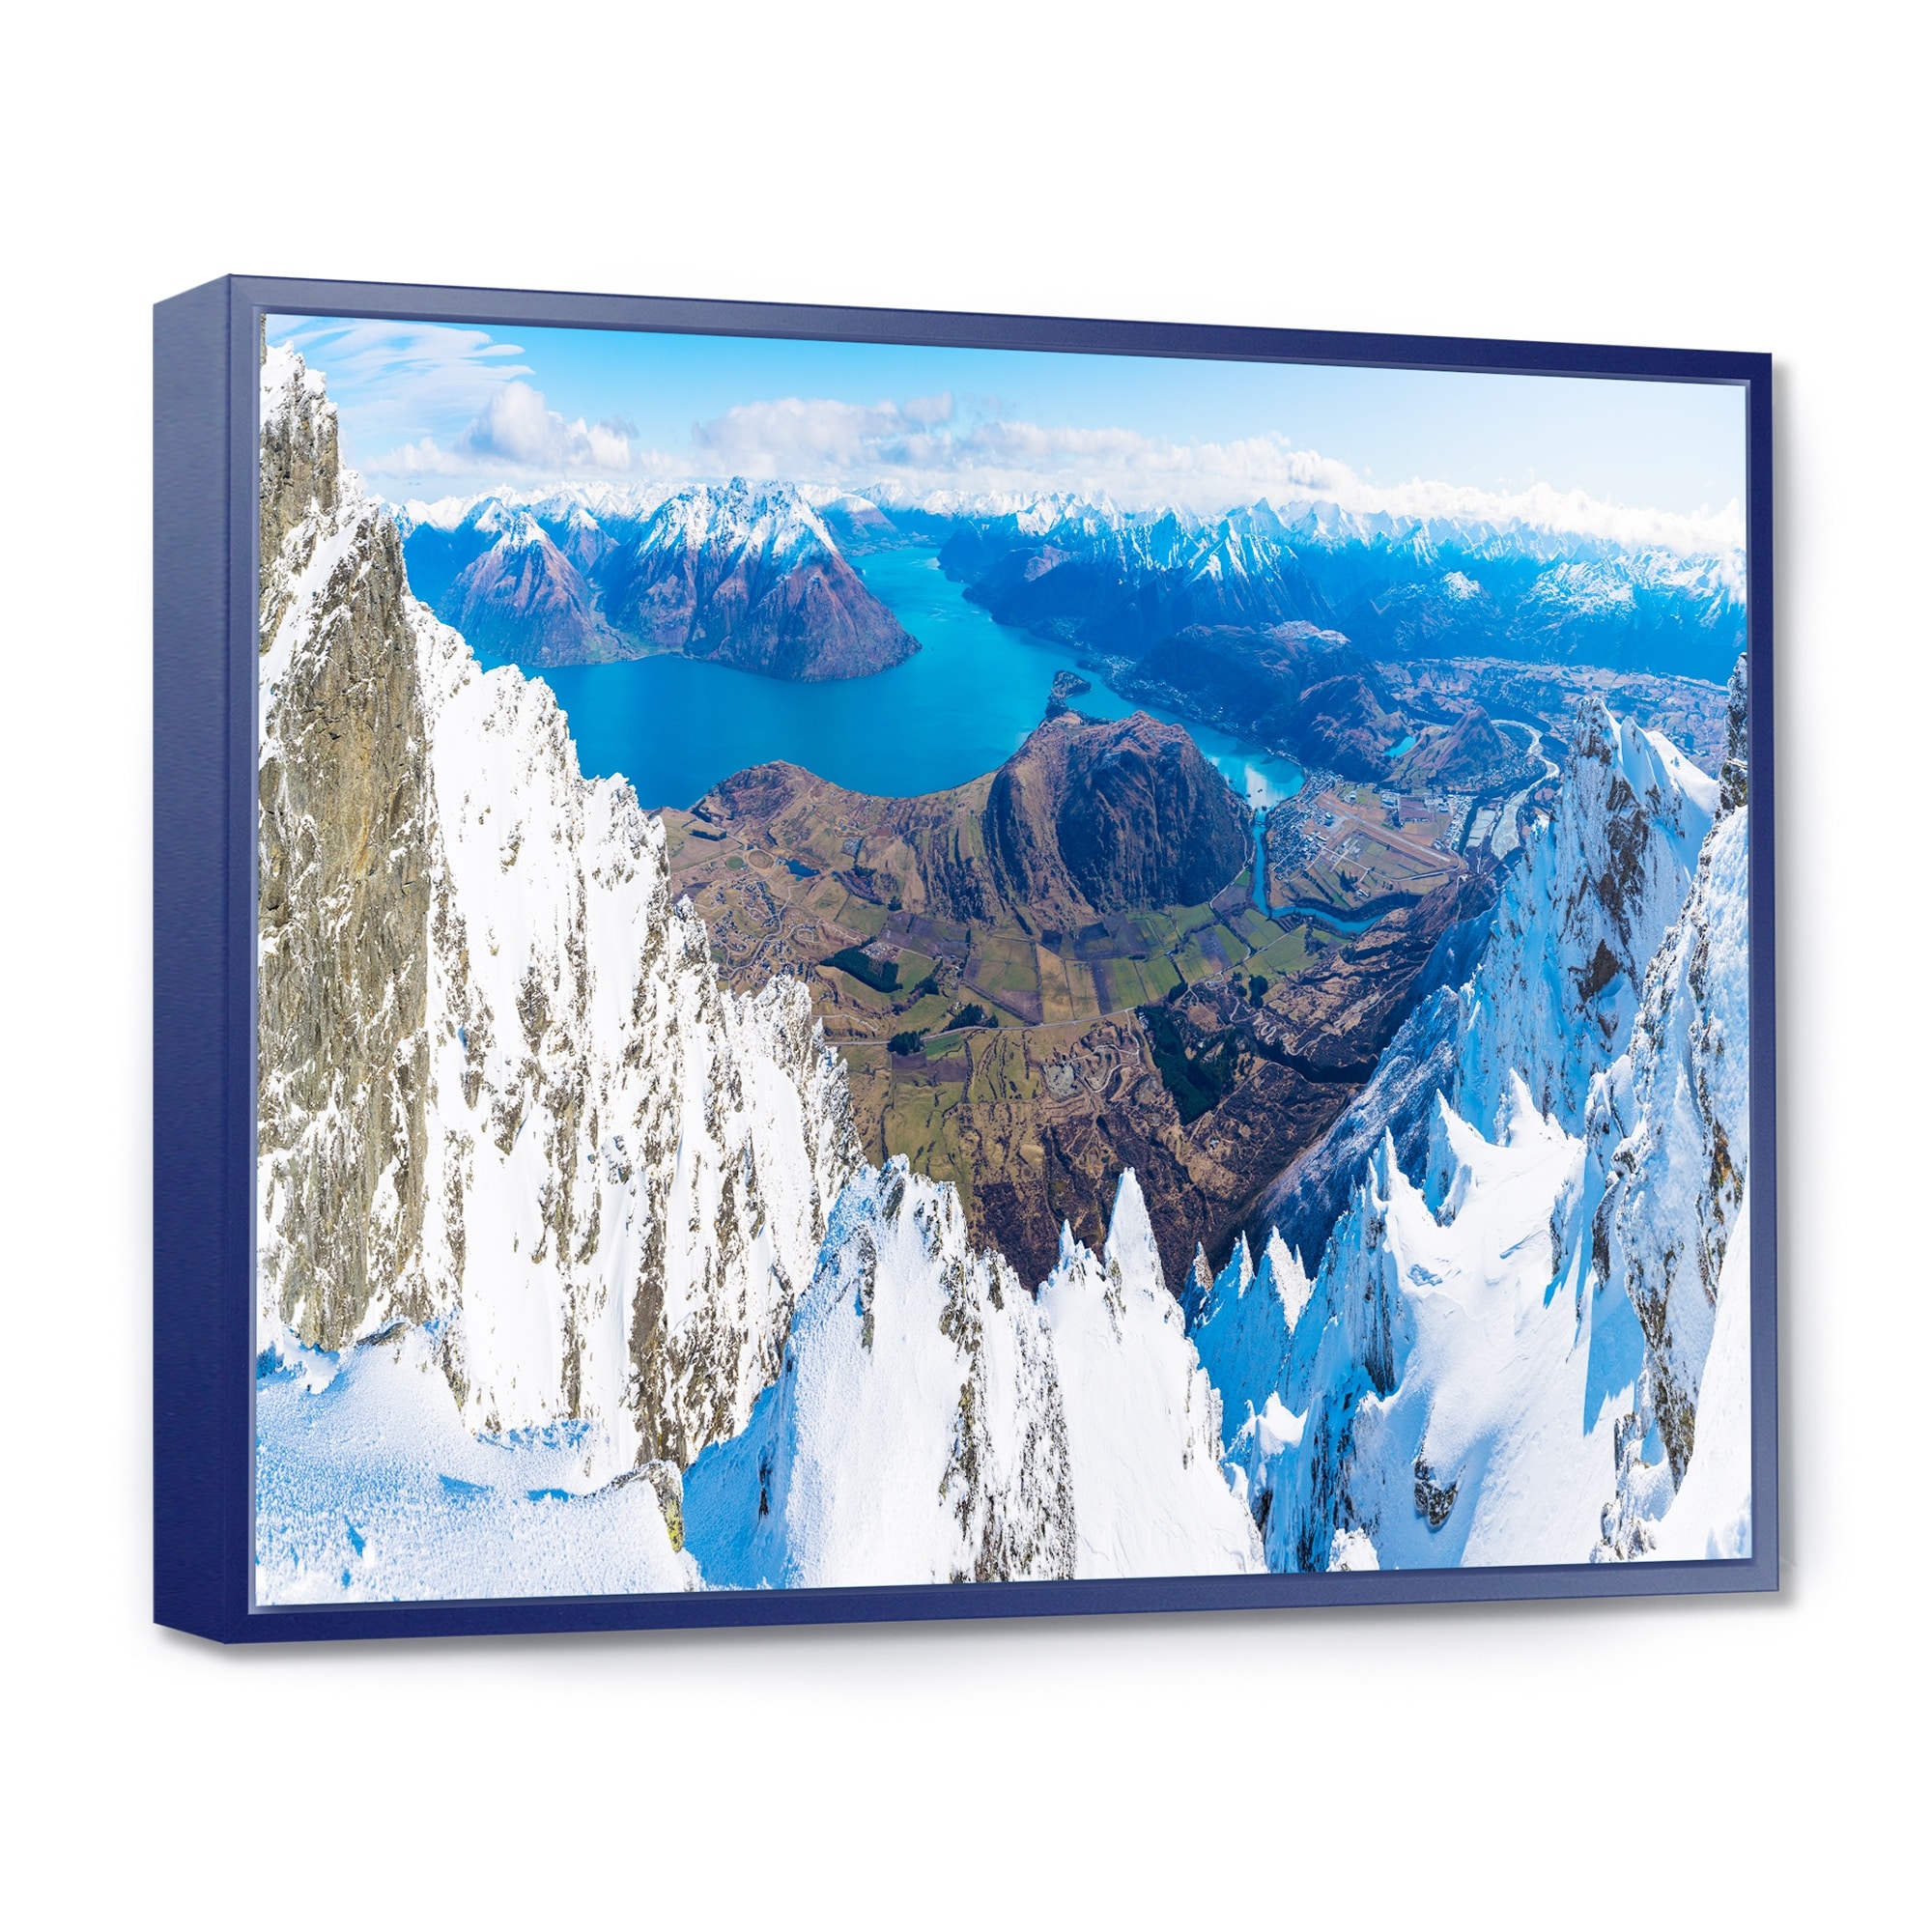  Design Art Designart Wave with Whitecaps on Lake Baikal  Seashore Framed Canvas Art Print 32 in. wide x 16 in. high Blue